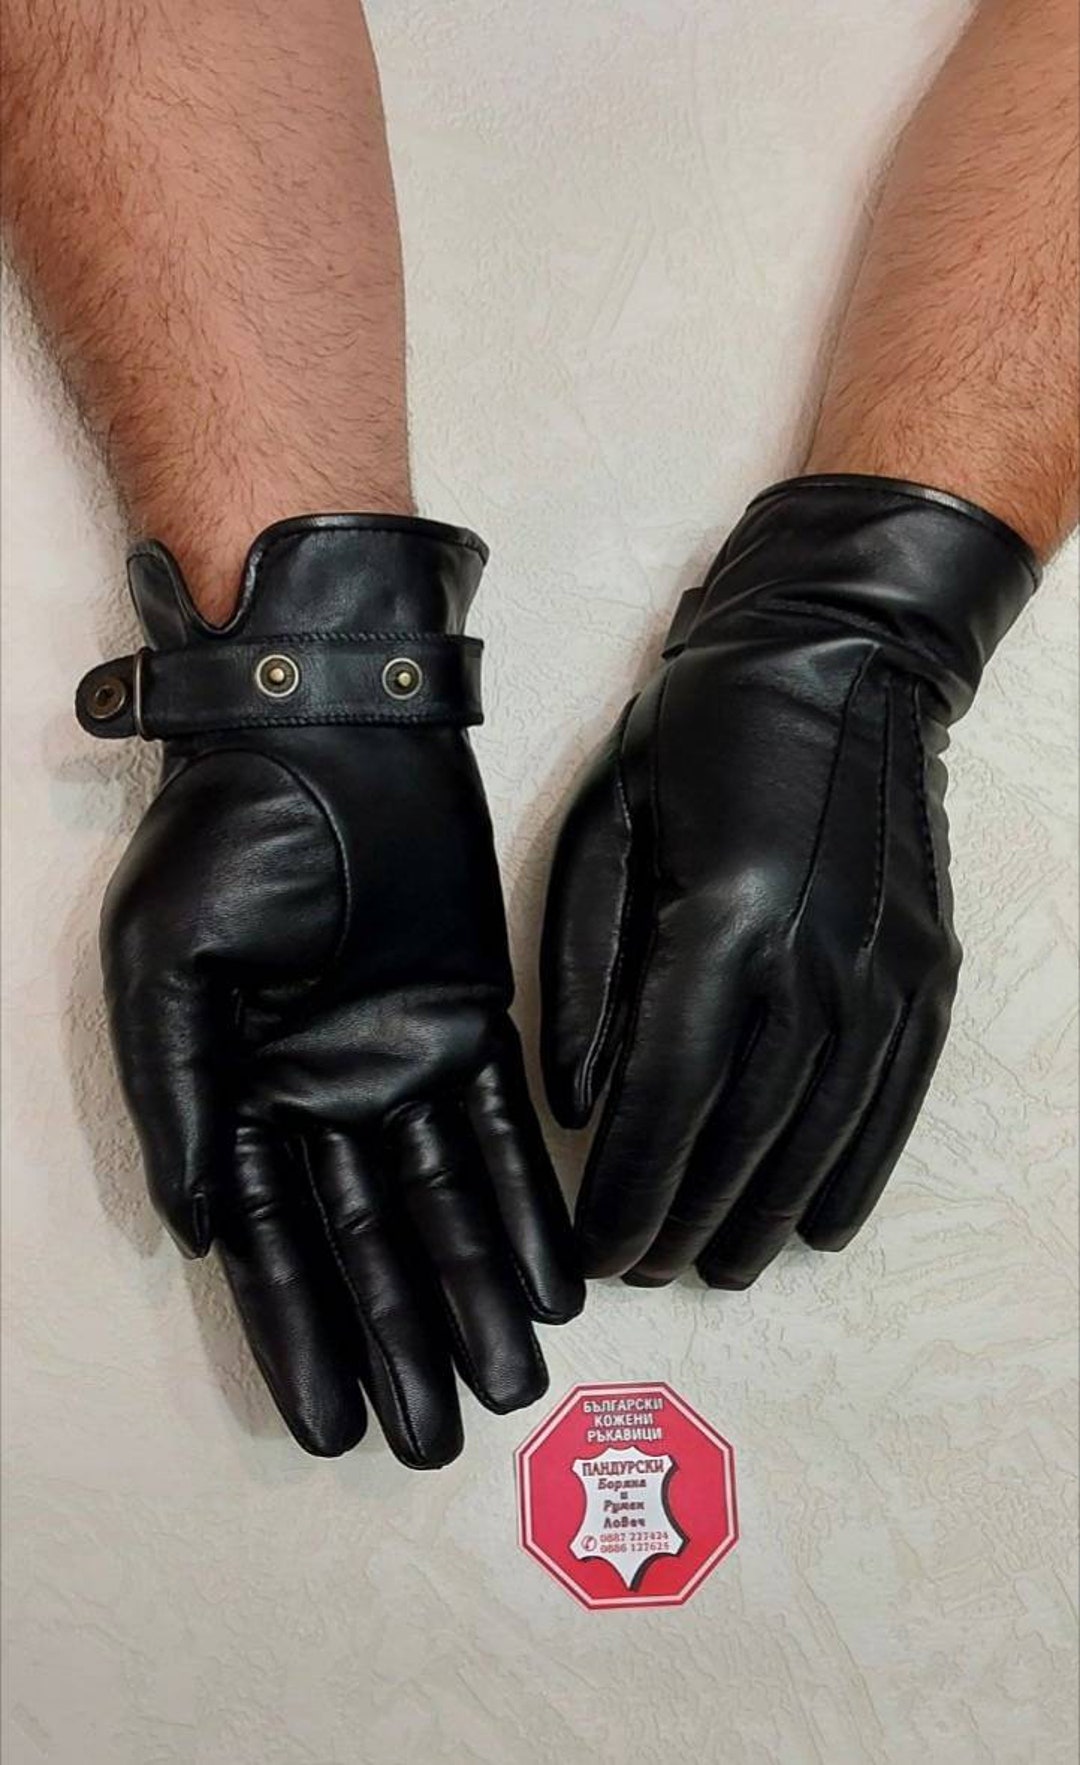 KINBOM 1 Pair Half Finger Leather Gloves, Stylish Fingerless Leather Gloves Biker Punk Gloves for Halloween Women Girls Cosplay Performance (Black)